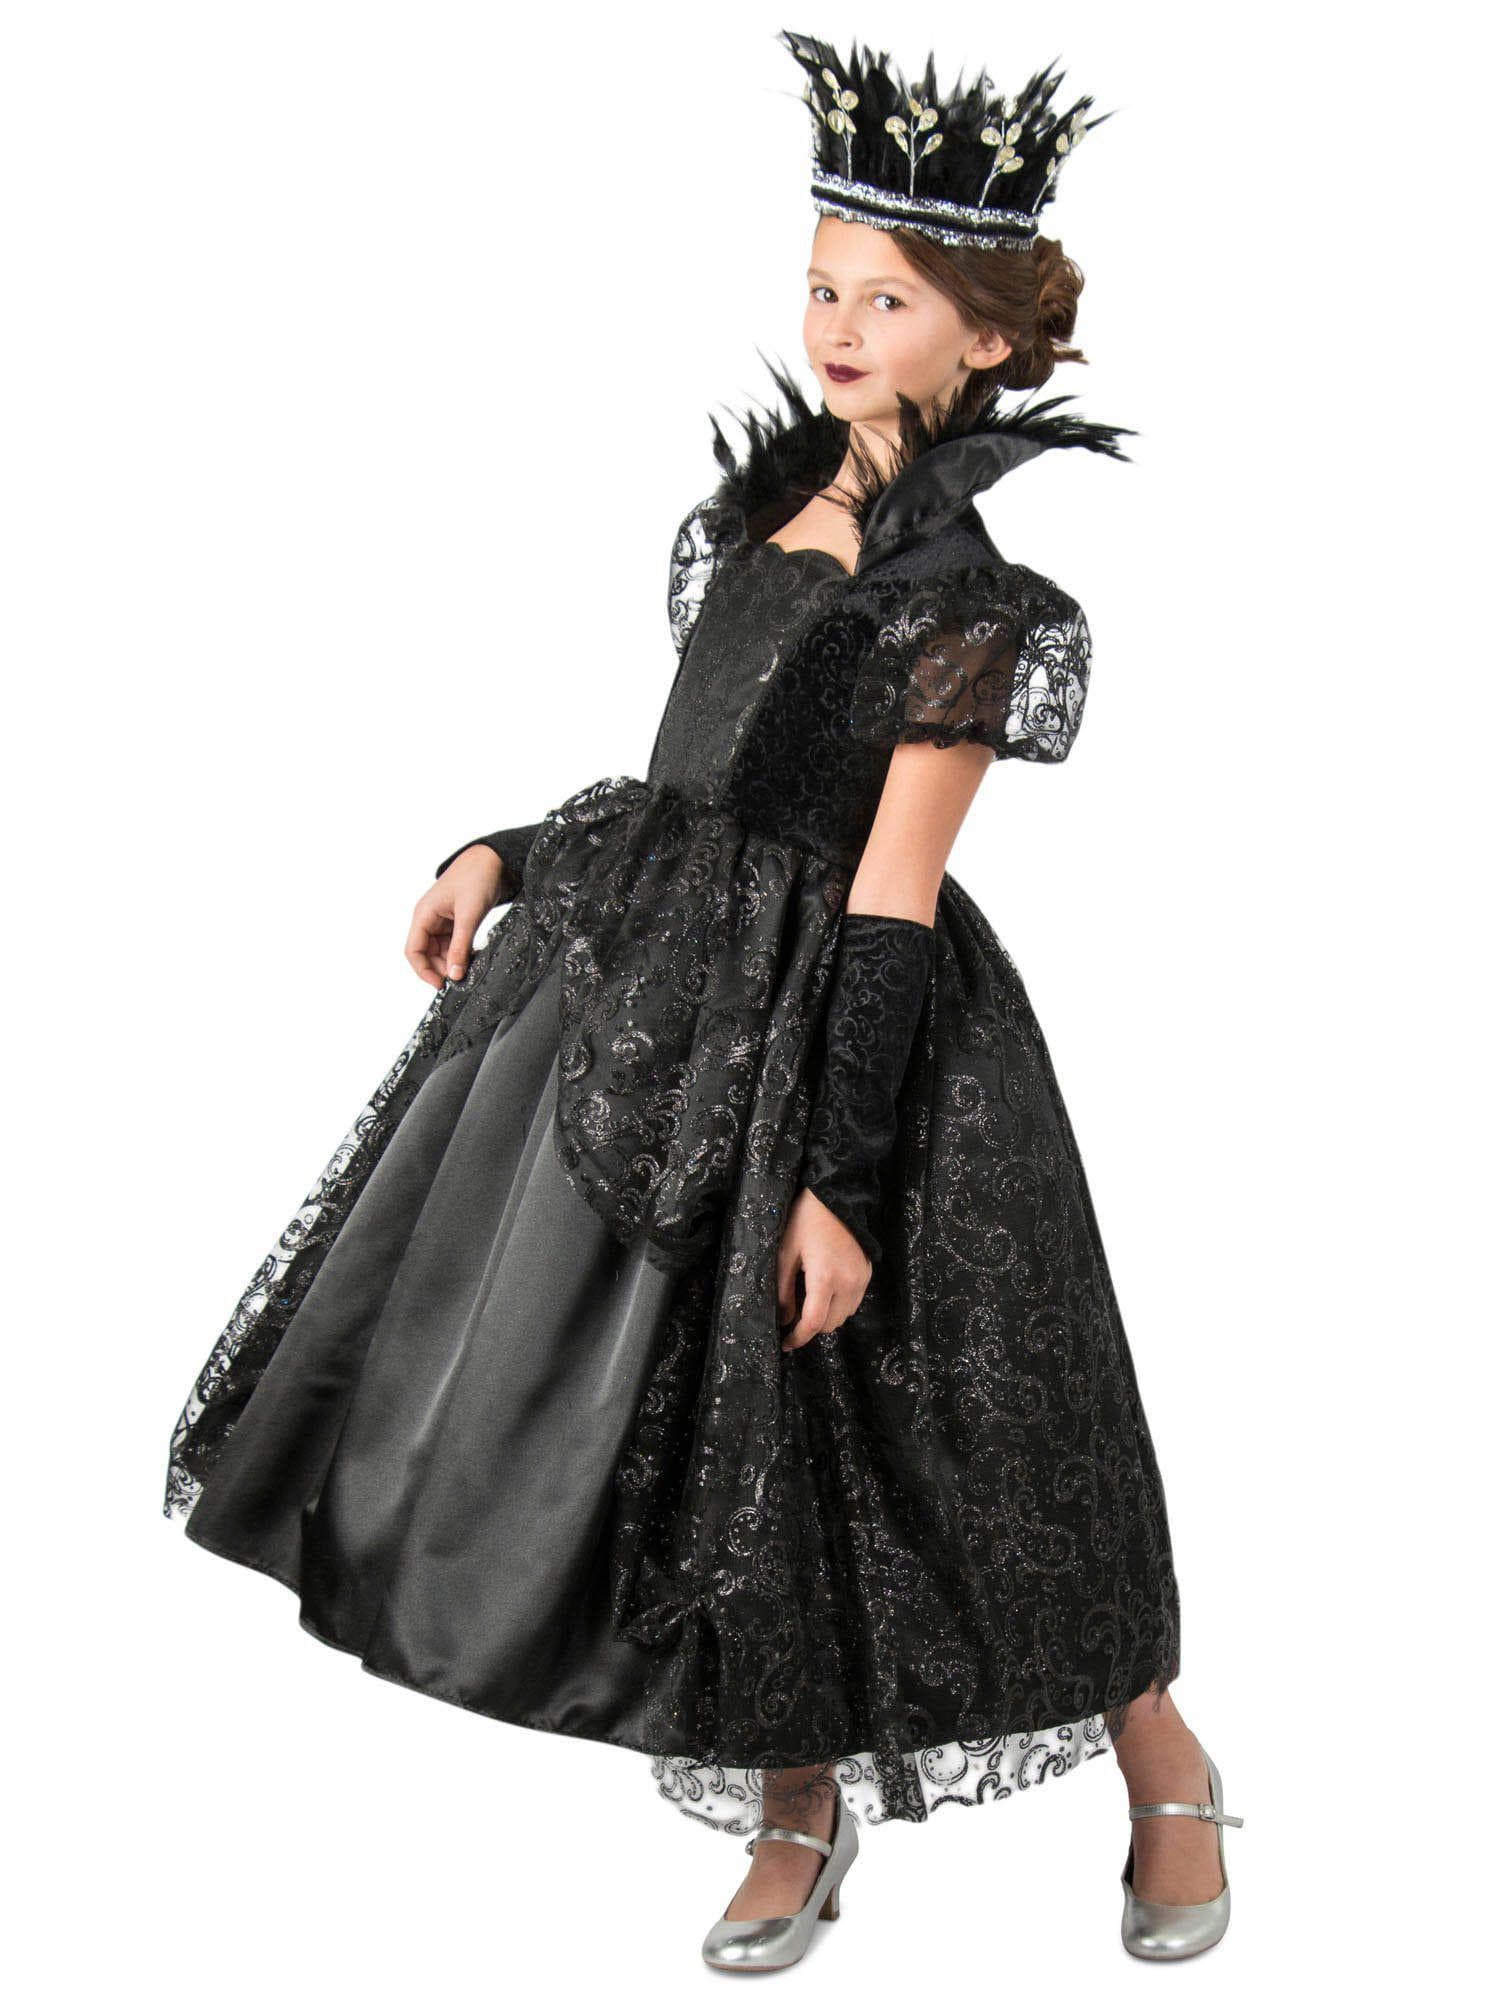 Kid's Dark Princess Costume - costumes.com